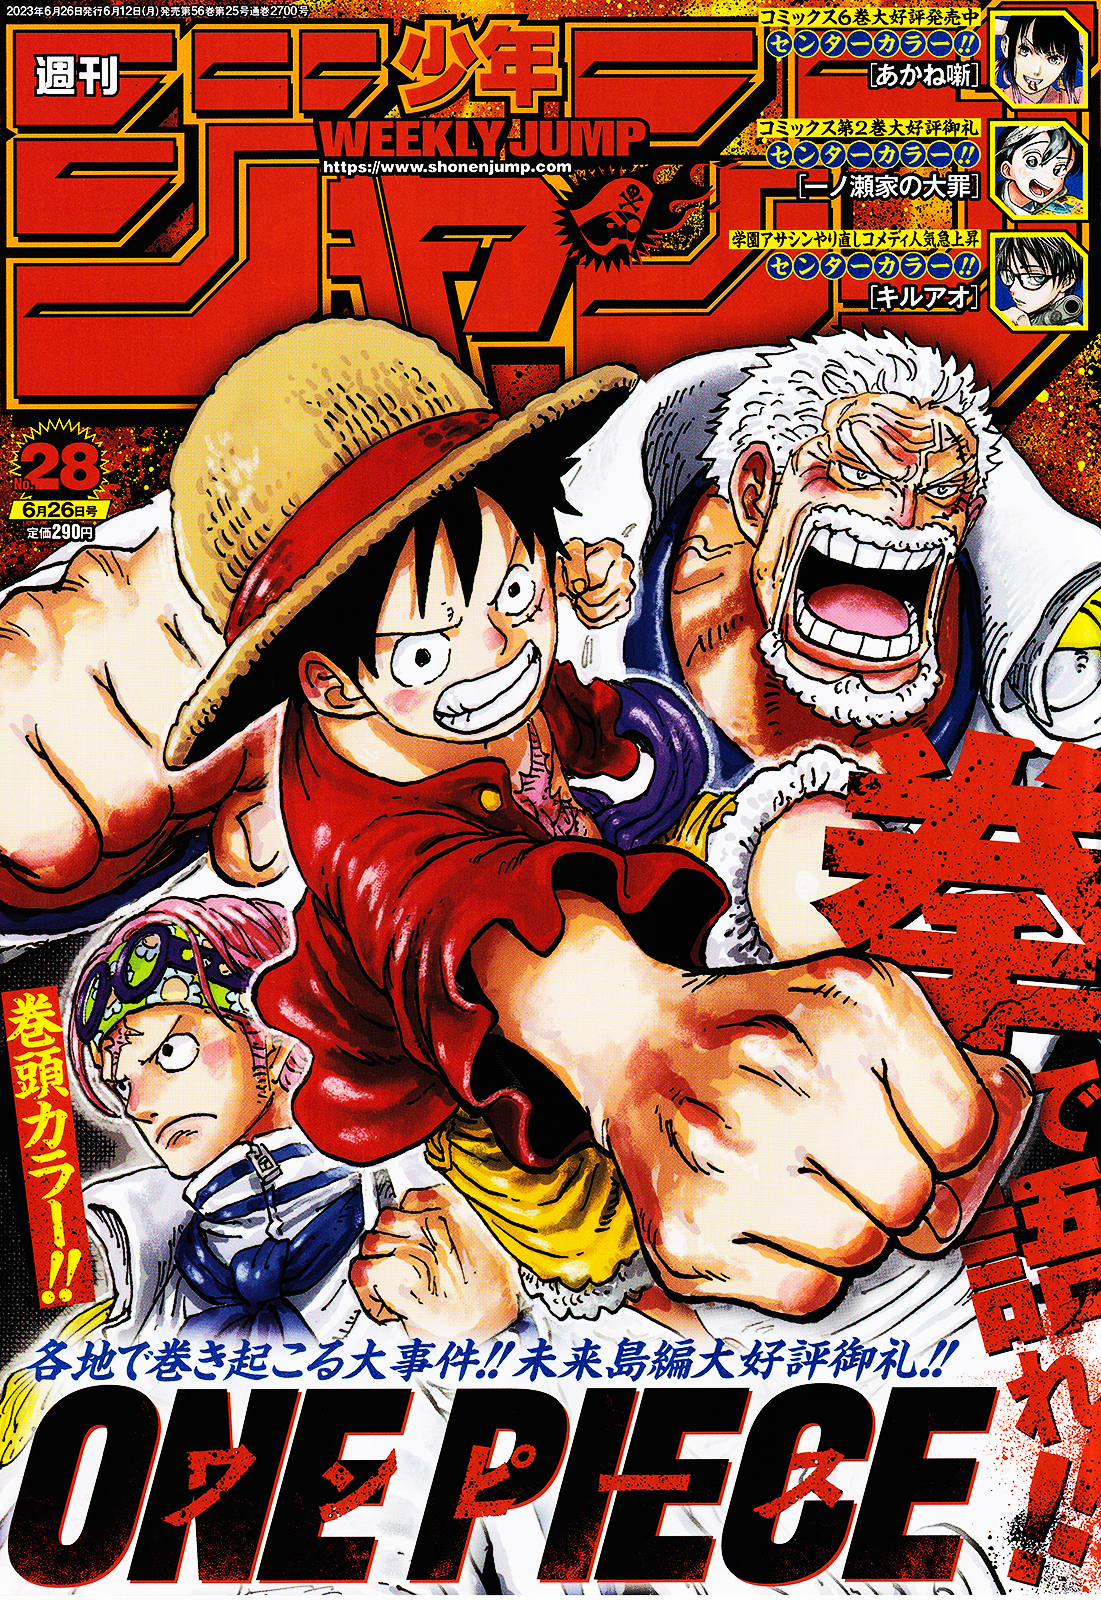 The God’s Strike Back! One Piece Chapter 1,086 BREAKDOWN